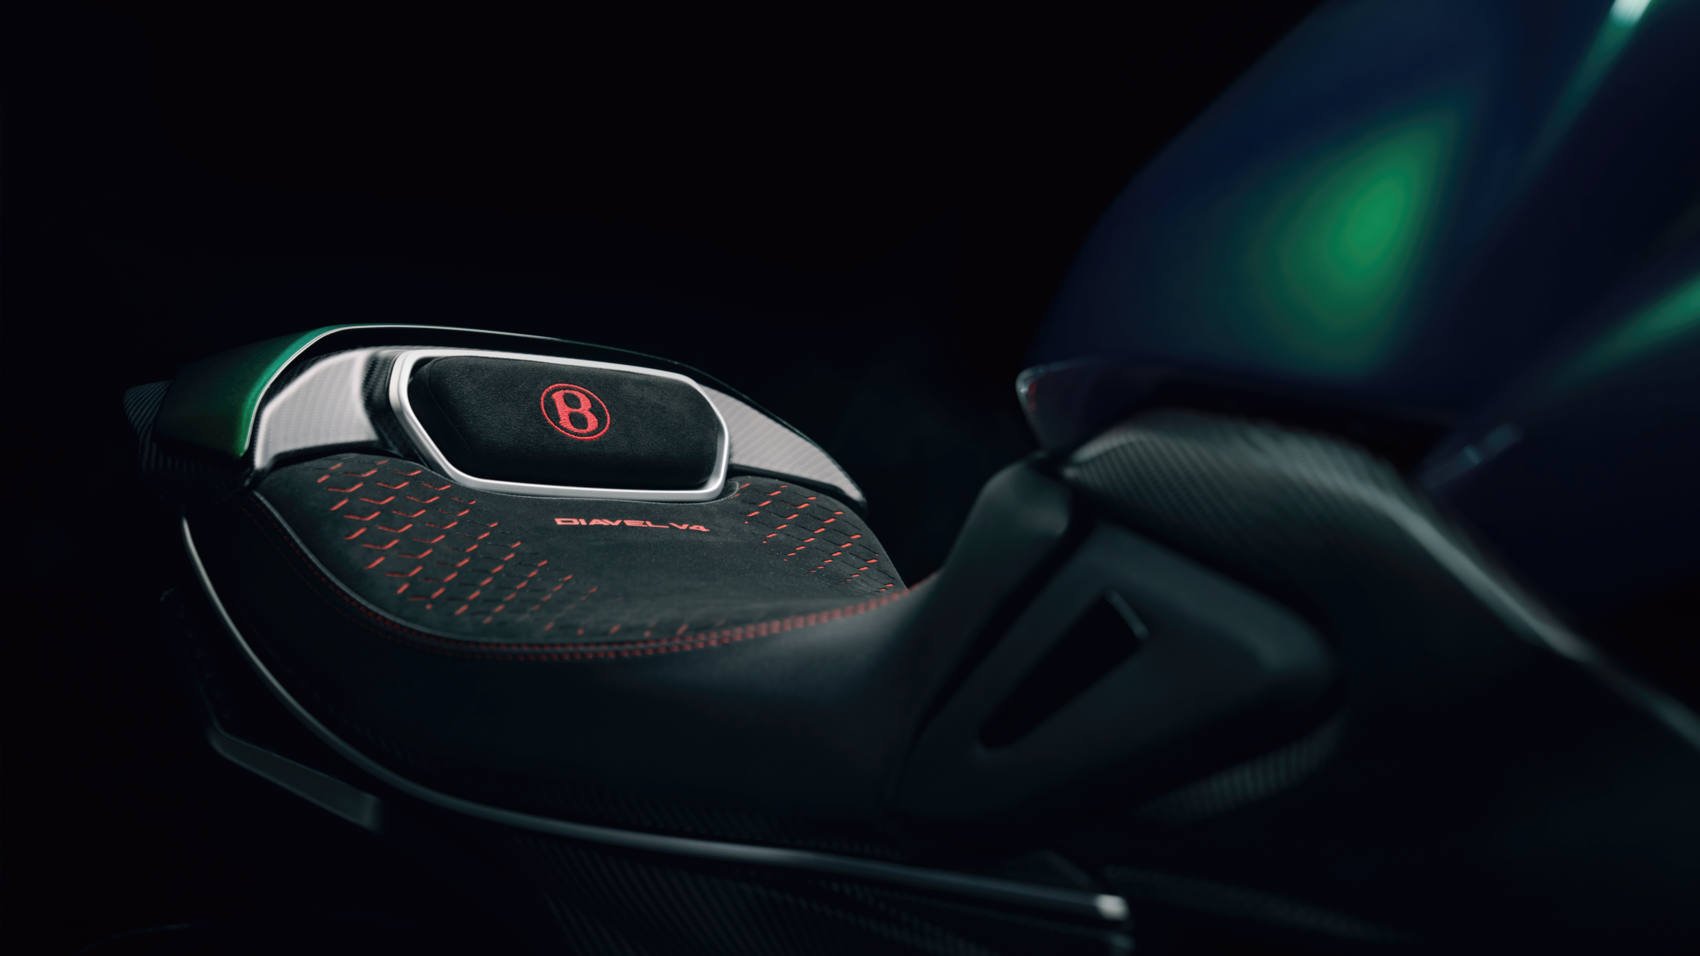 Siedzisko Ducati Diavel z logotypem marki Bentley